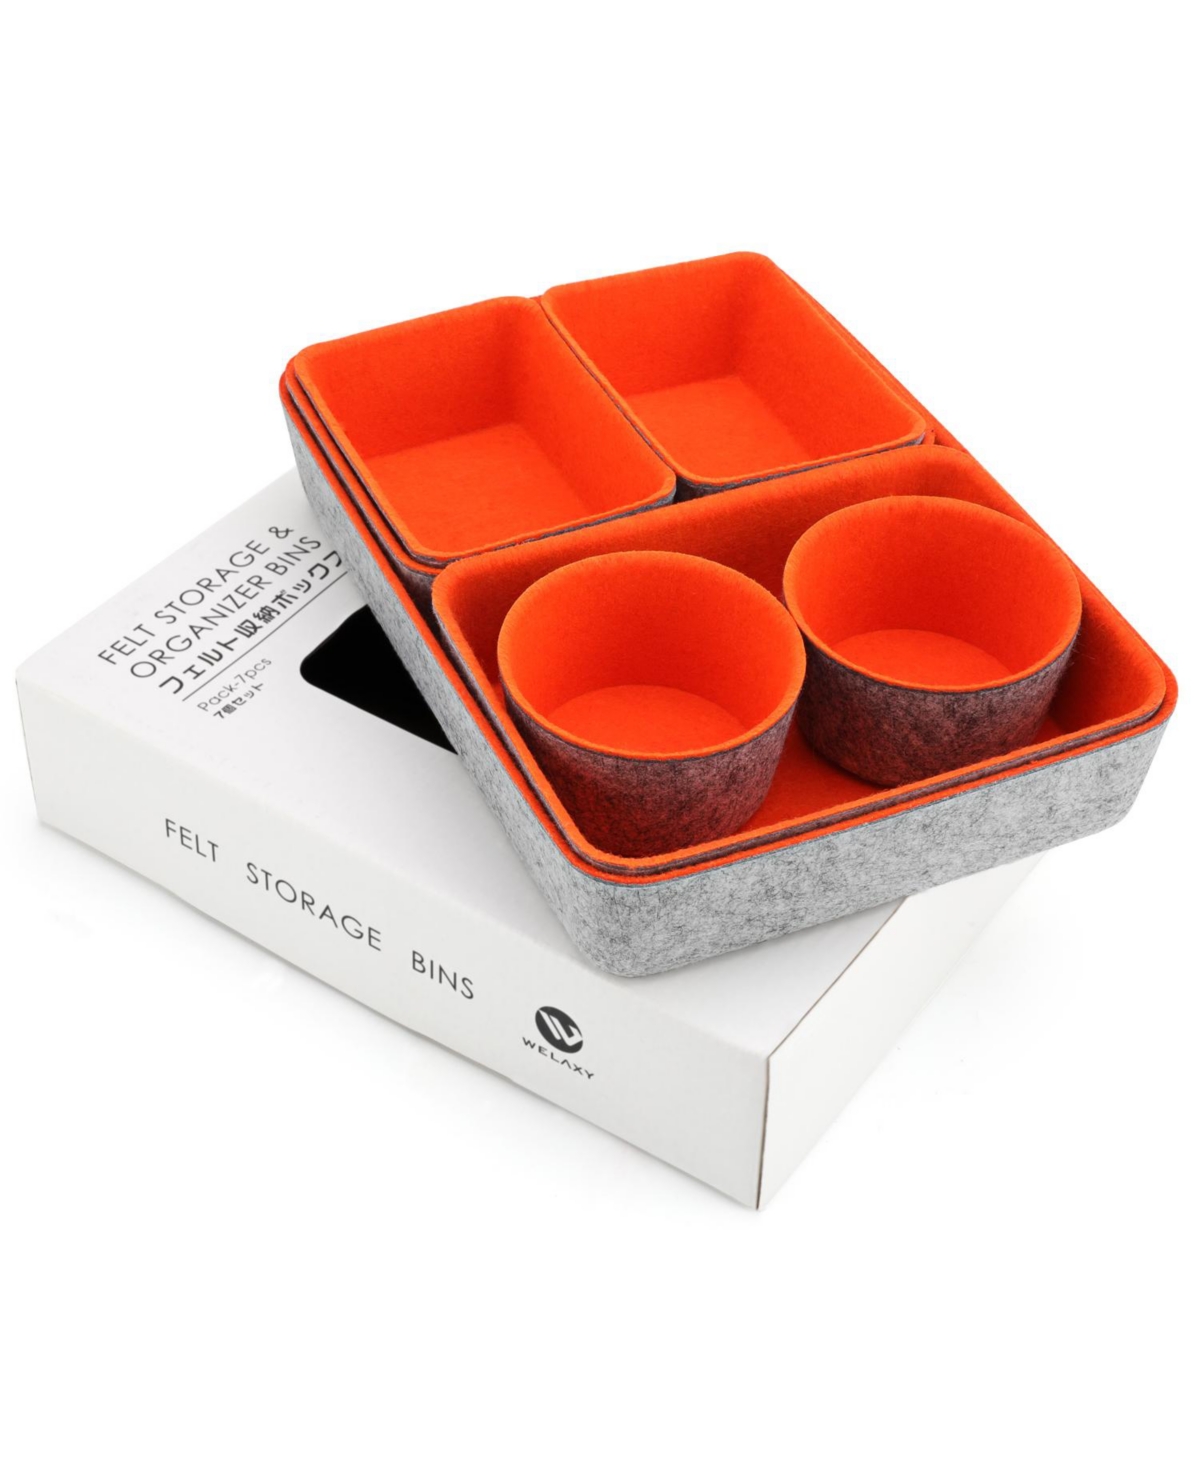 Welaxy 7 Piece Felt Drawer Organizer Set With Round Cups And Trays In Orange